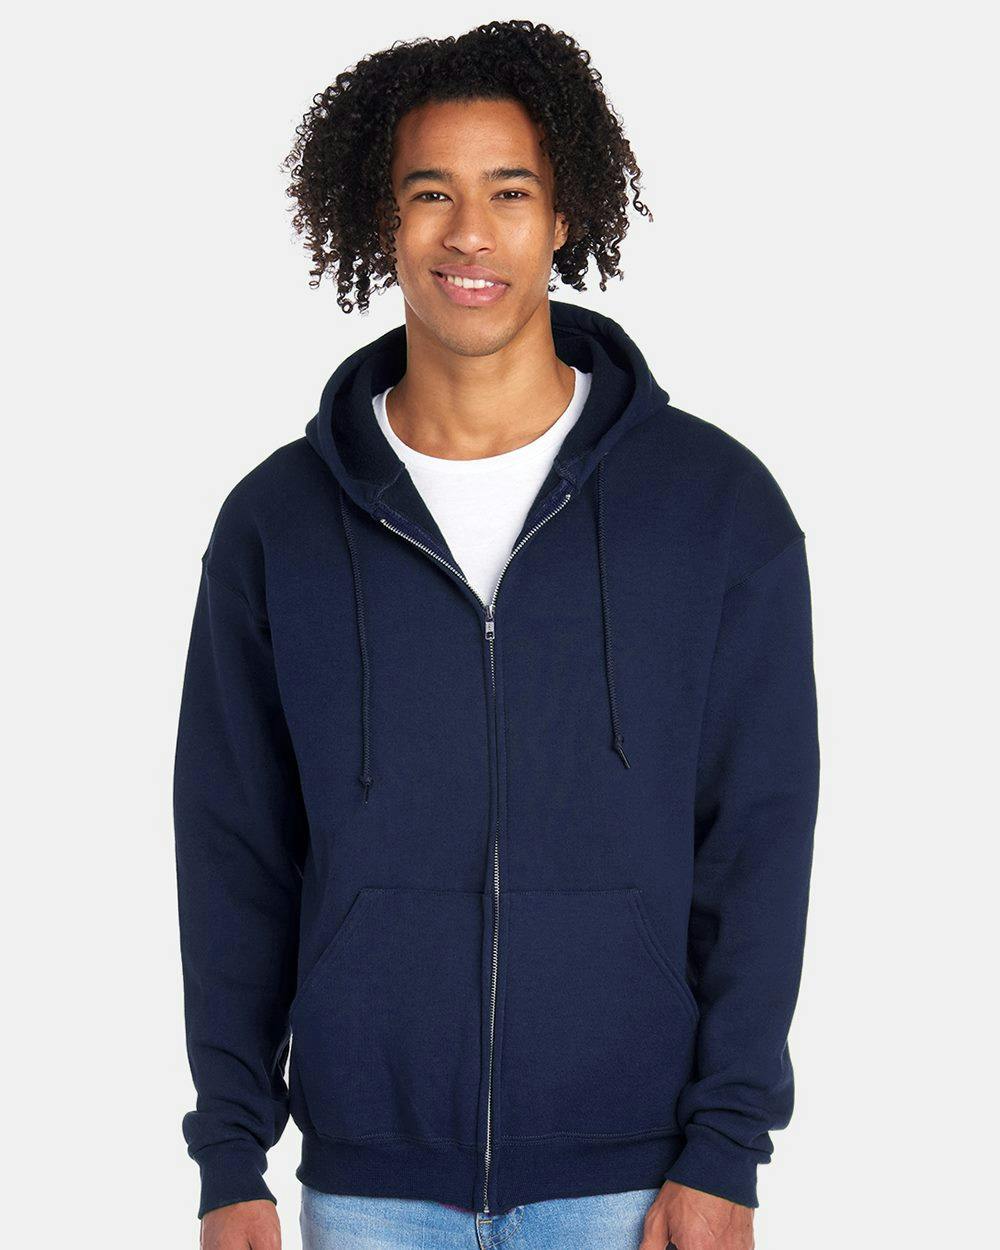 Image for Supercotton Full-Zip Hooded Sweatshirt - 82230R